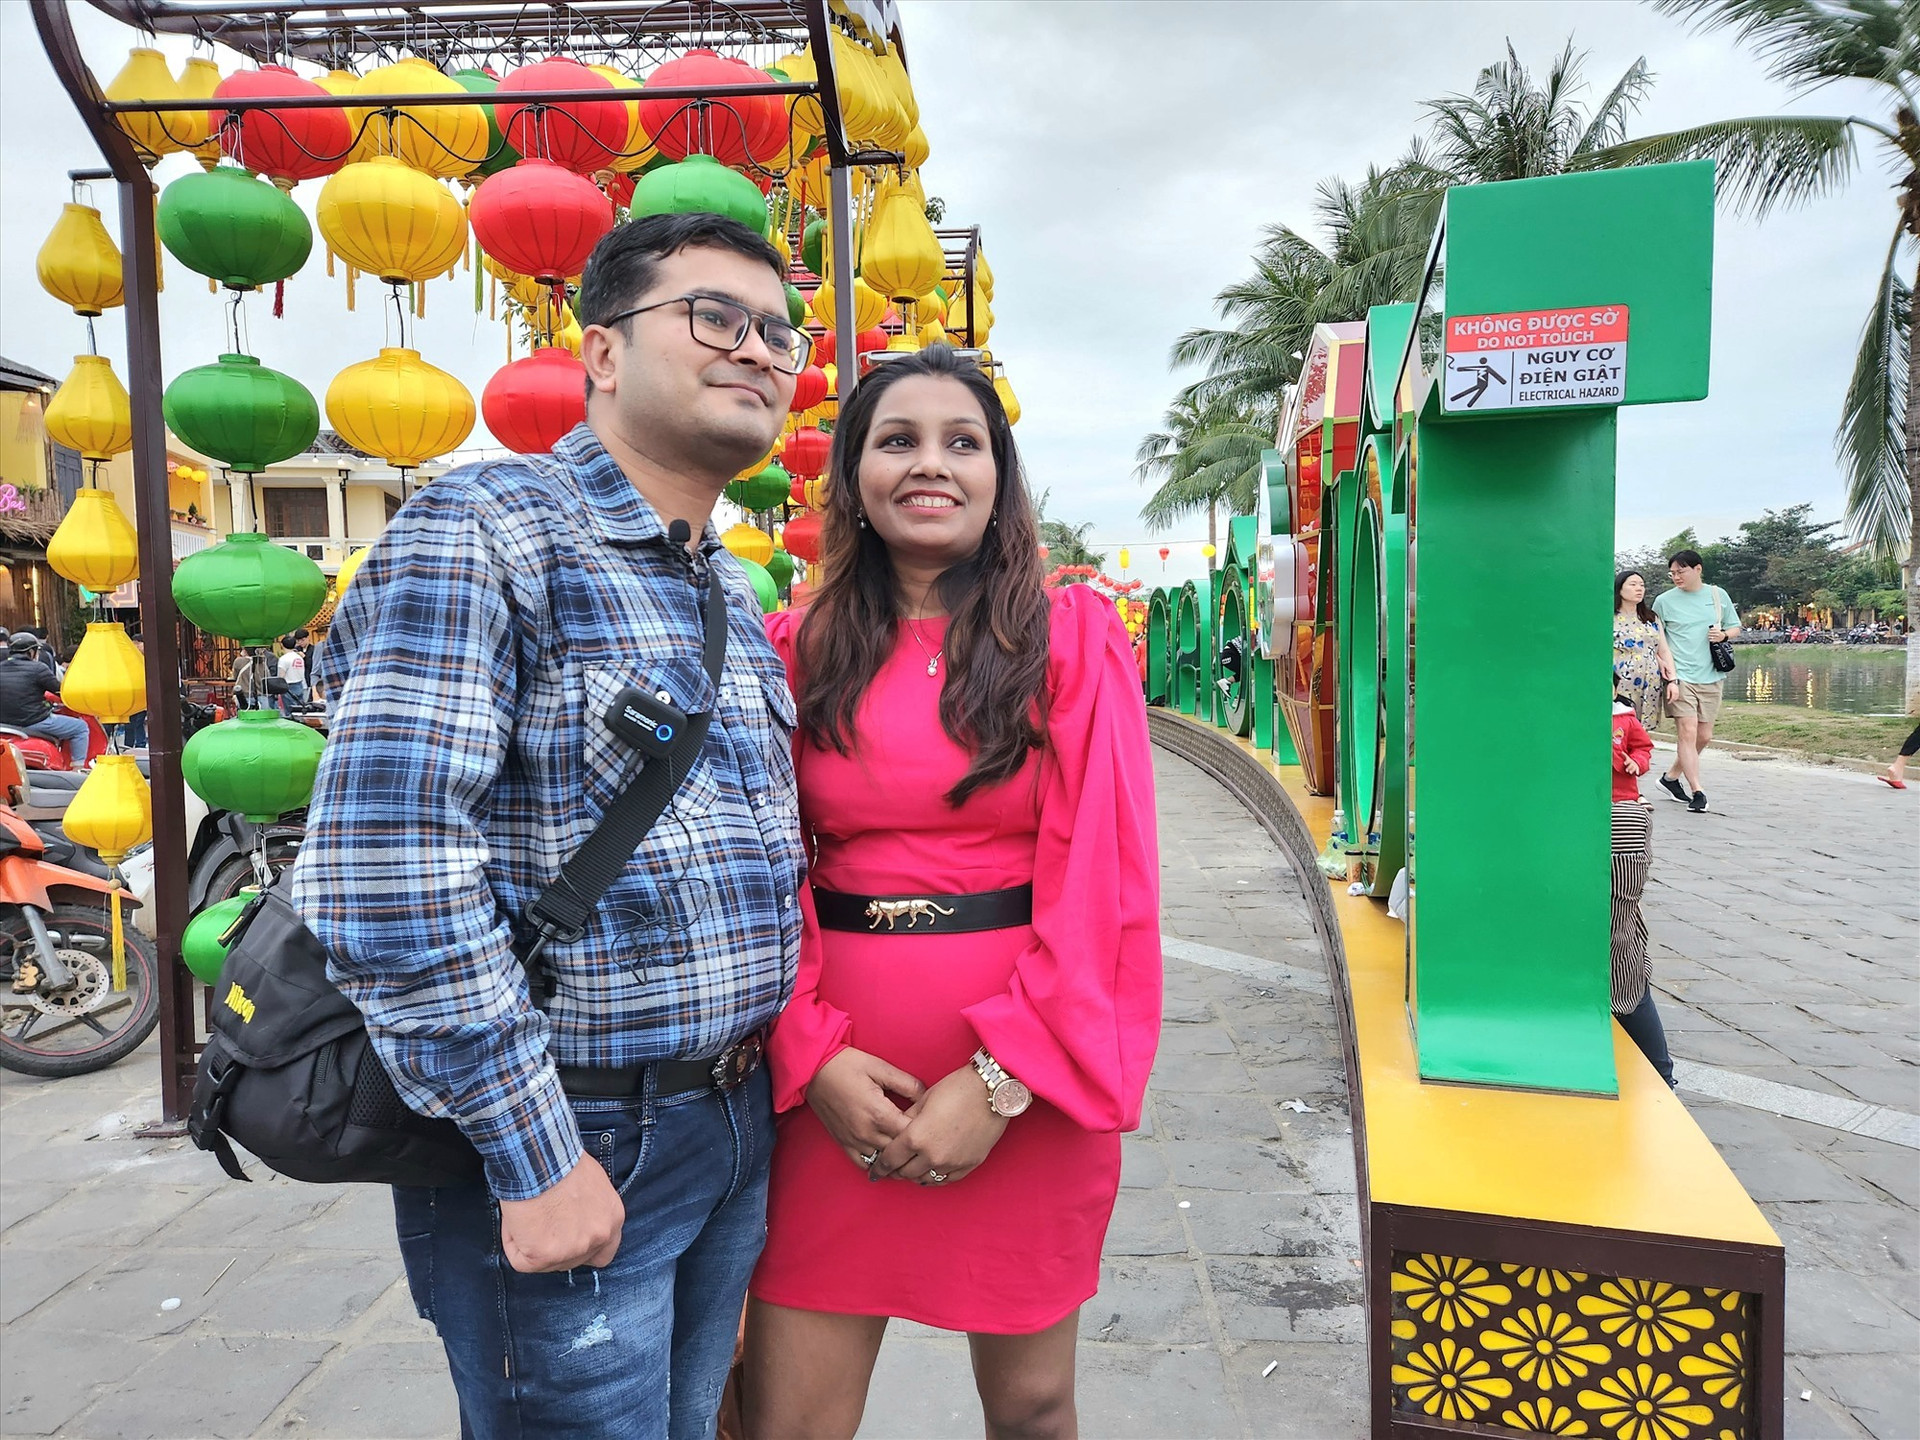 Indian tourists to Hoi An city, Quang Nam province